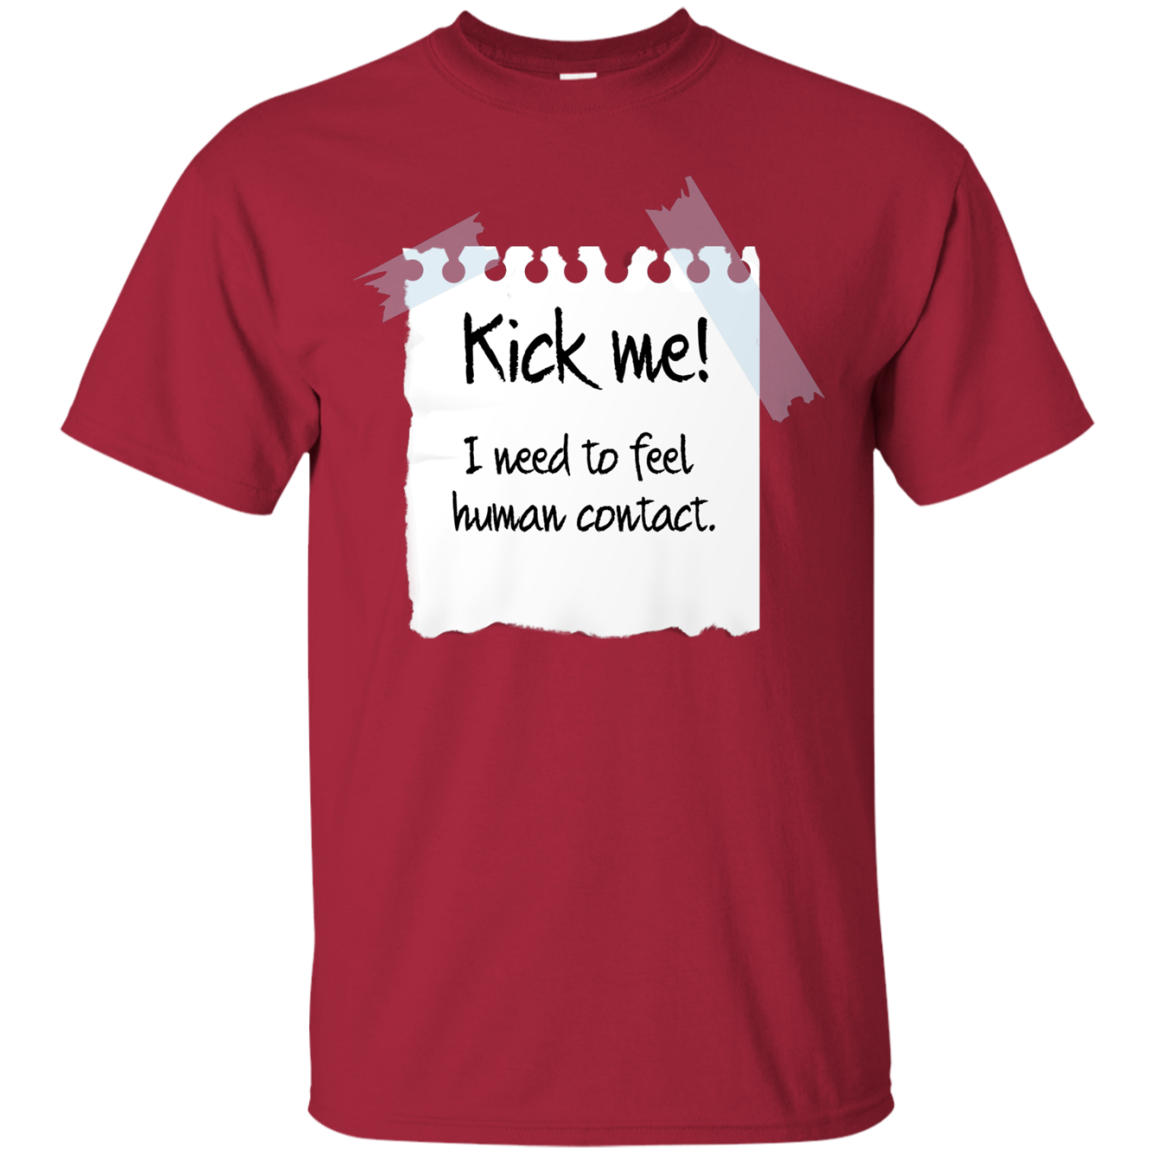 Kick Me T-Shirt